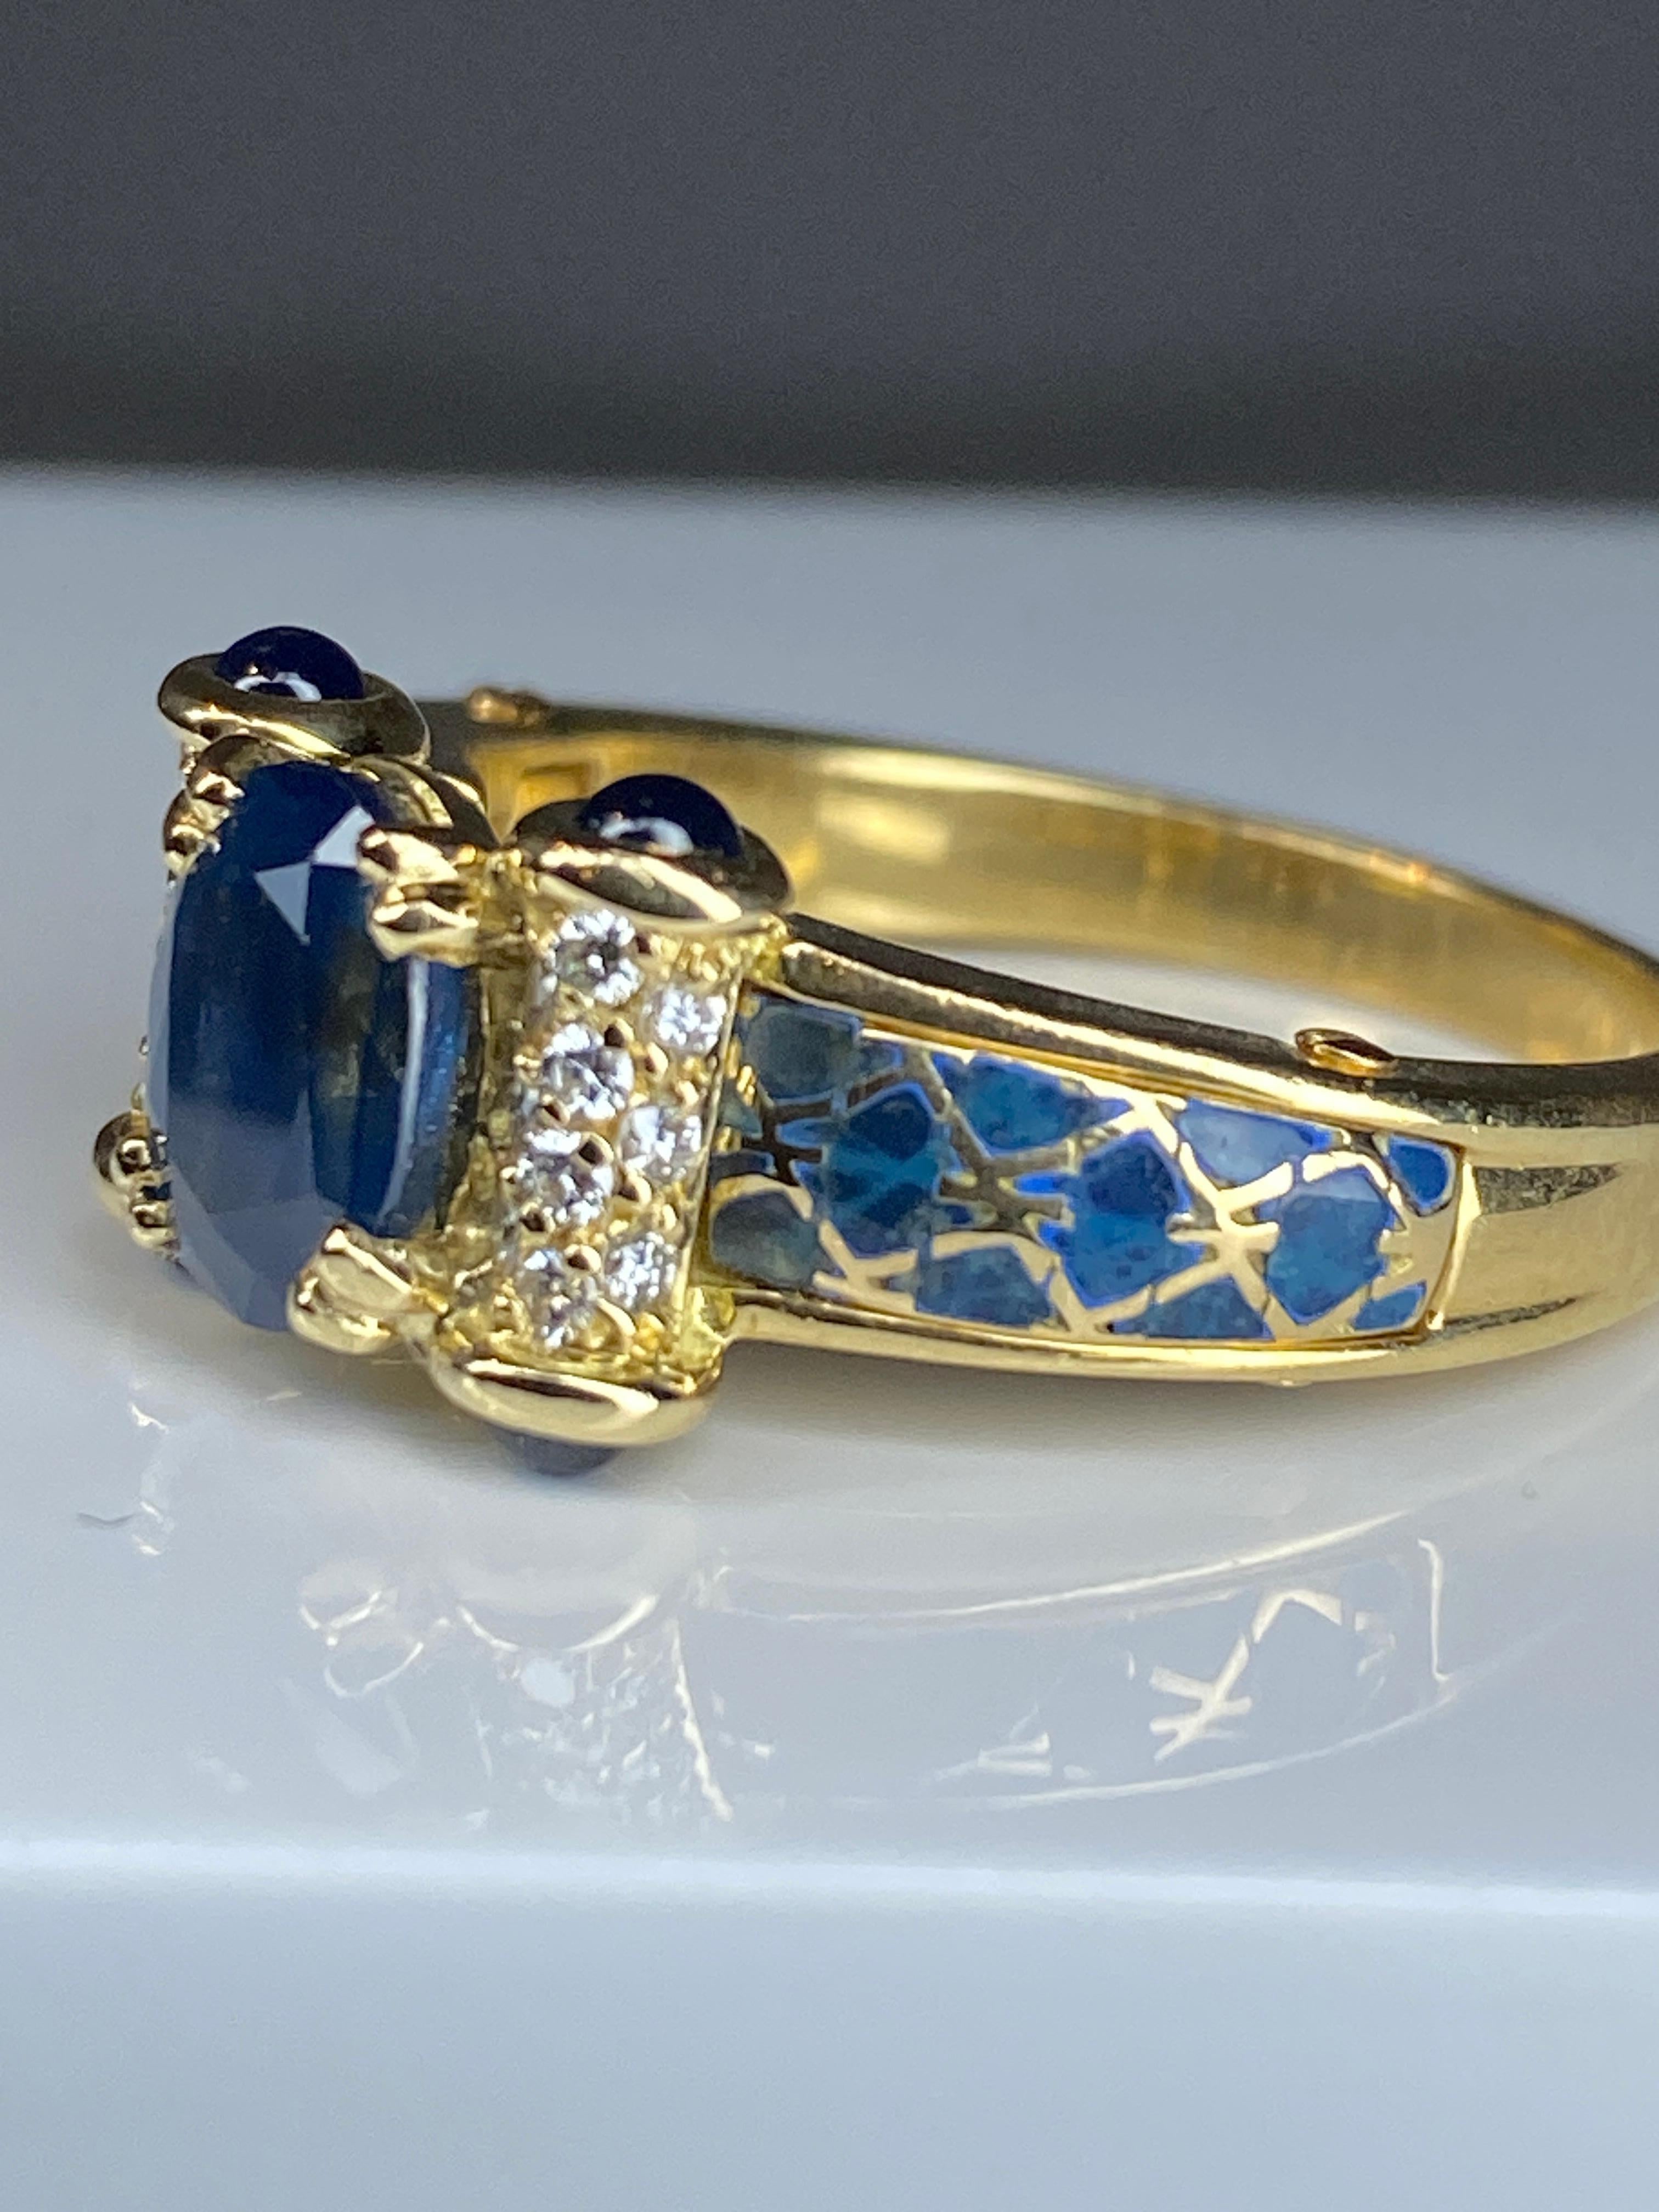 Korloff Ring in 18 Carat Gold: Sapphires, Diamonds, Blue Enamel For Sale 7